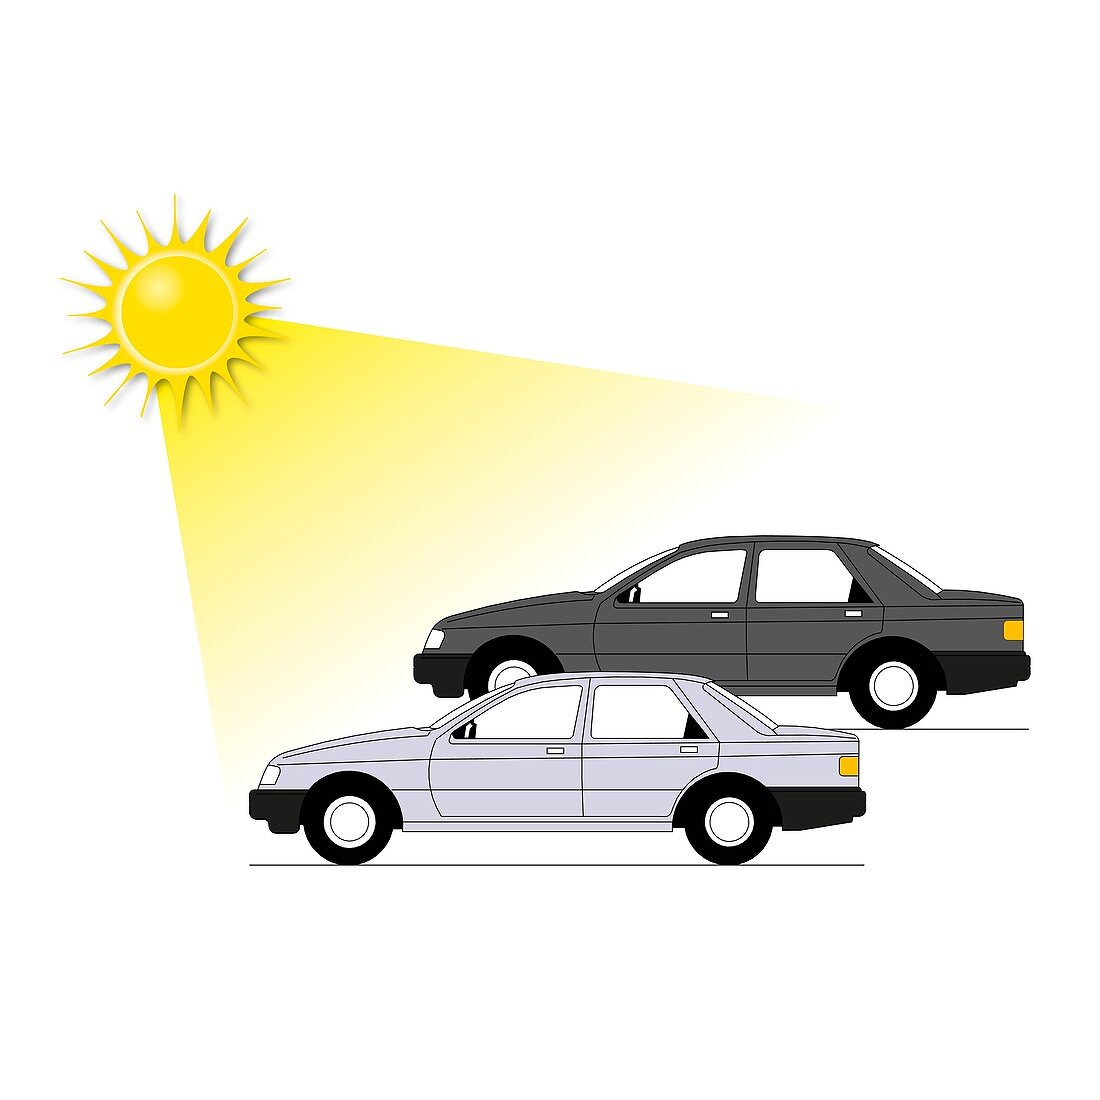 Dark car and light metallic car in the sun, illustration